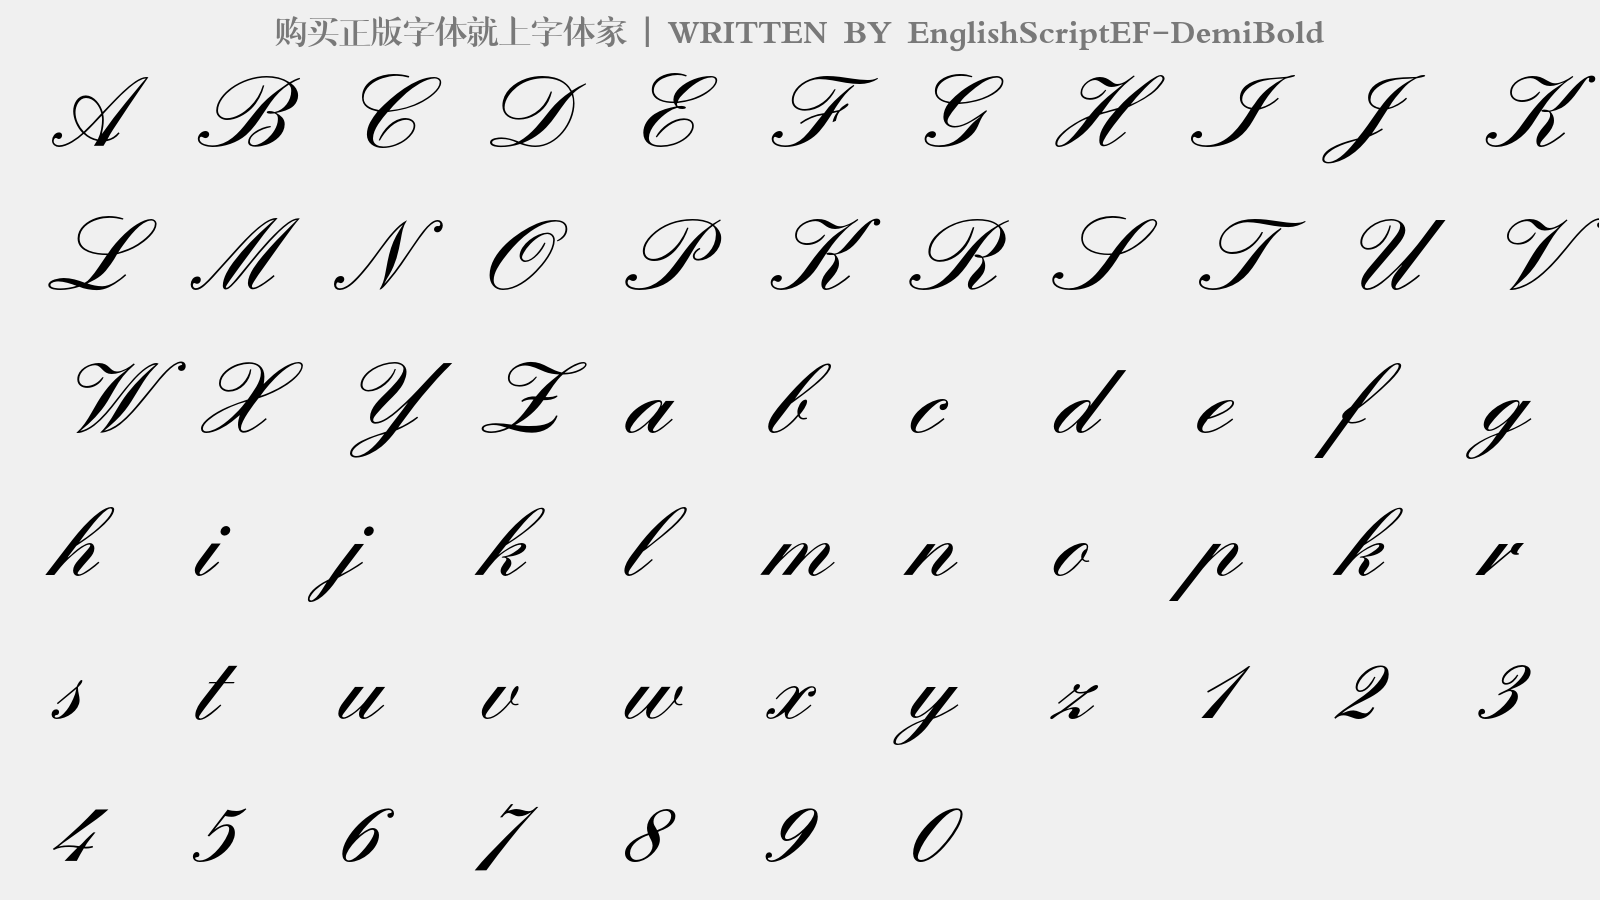 EnglishScriptEF-DemiBold - 大写字母/小写字母/数字